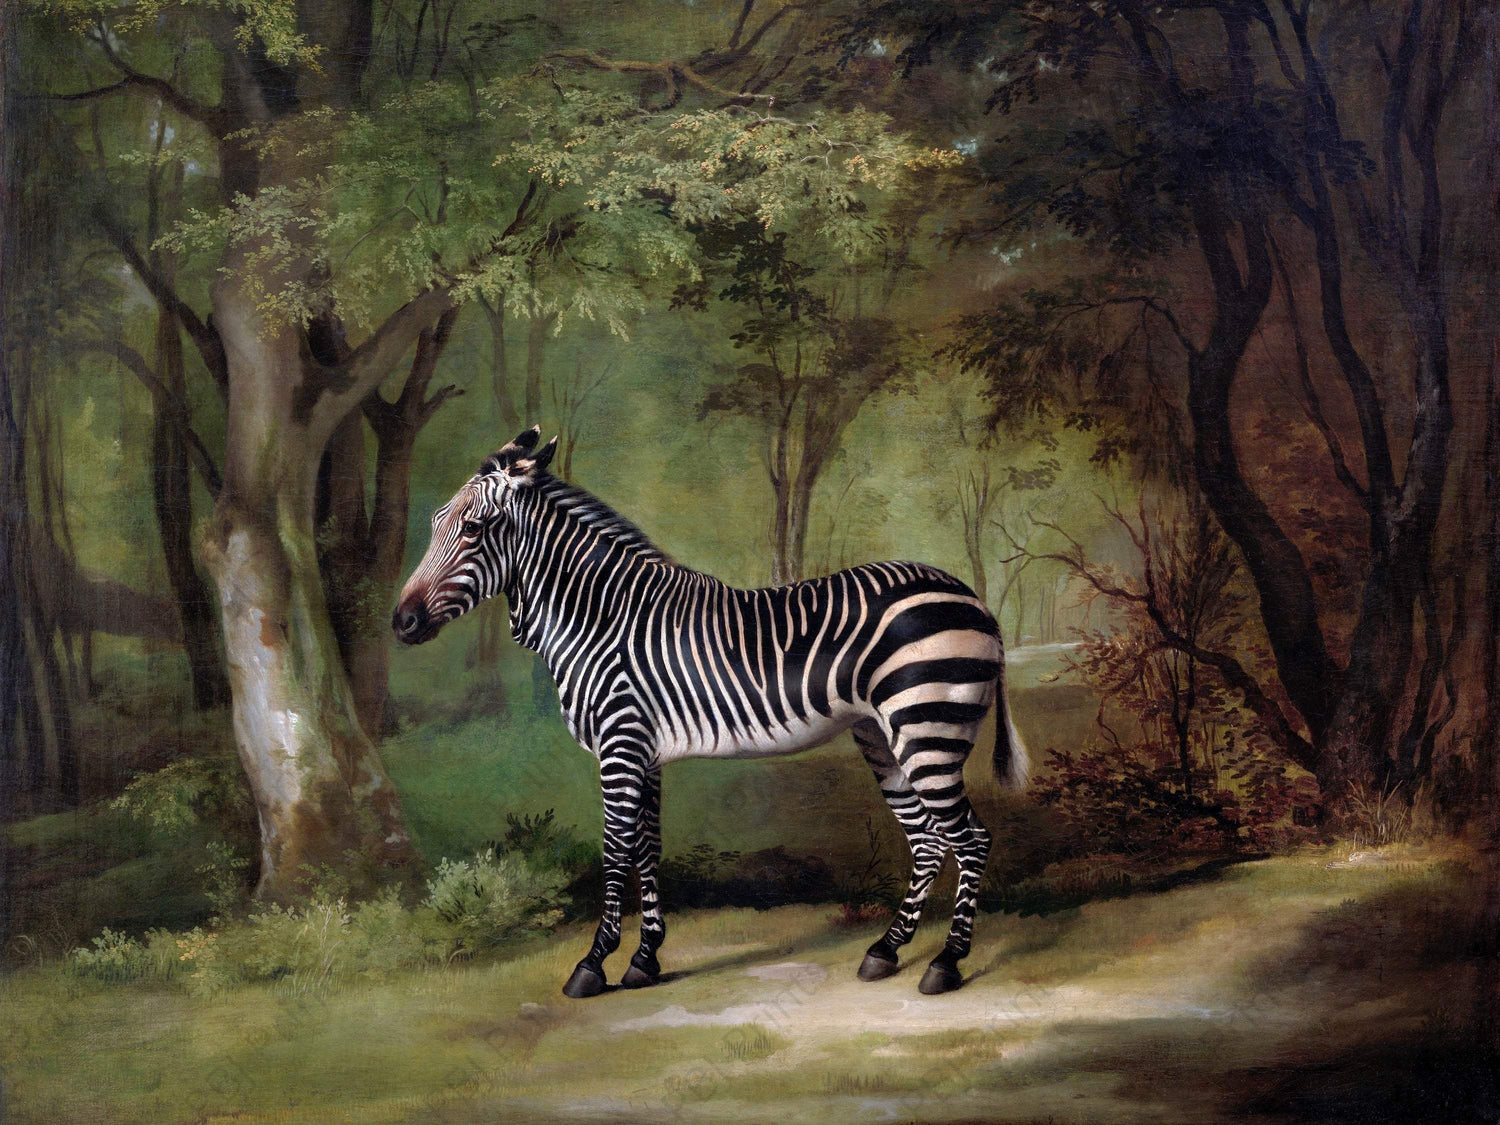 Zebra in the Wild - Artist by Renewed Spirit Home - Art Prints, Decoupage Rice Paper, Flat Canvas Prints, Giclee Prints, Photo Prints, Poster Prints, Scrapbook Paper